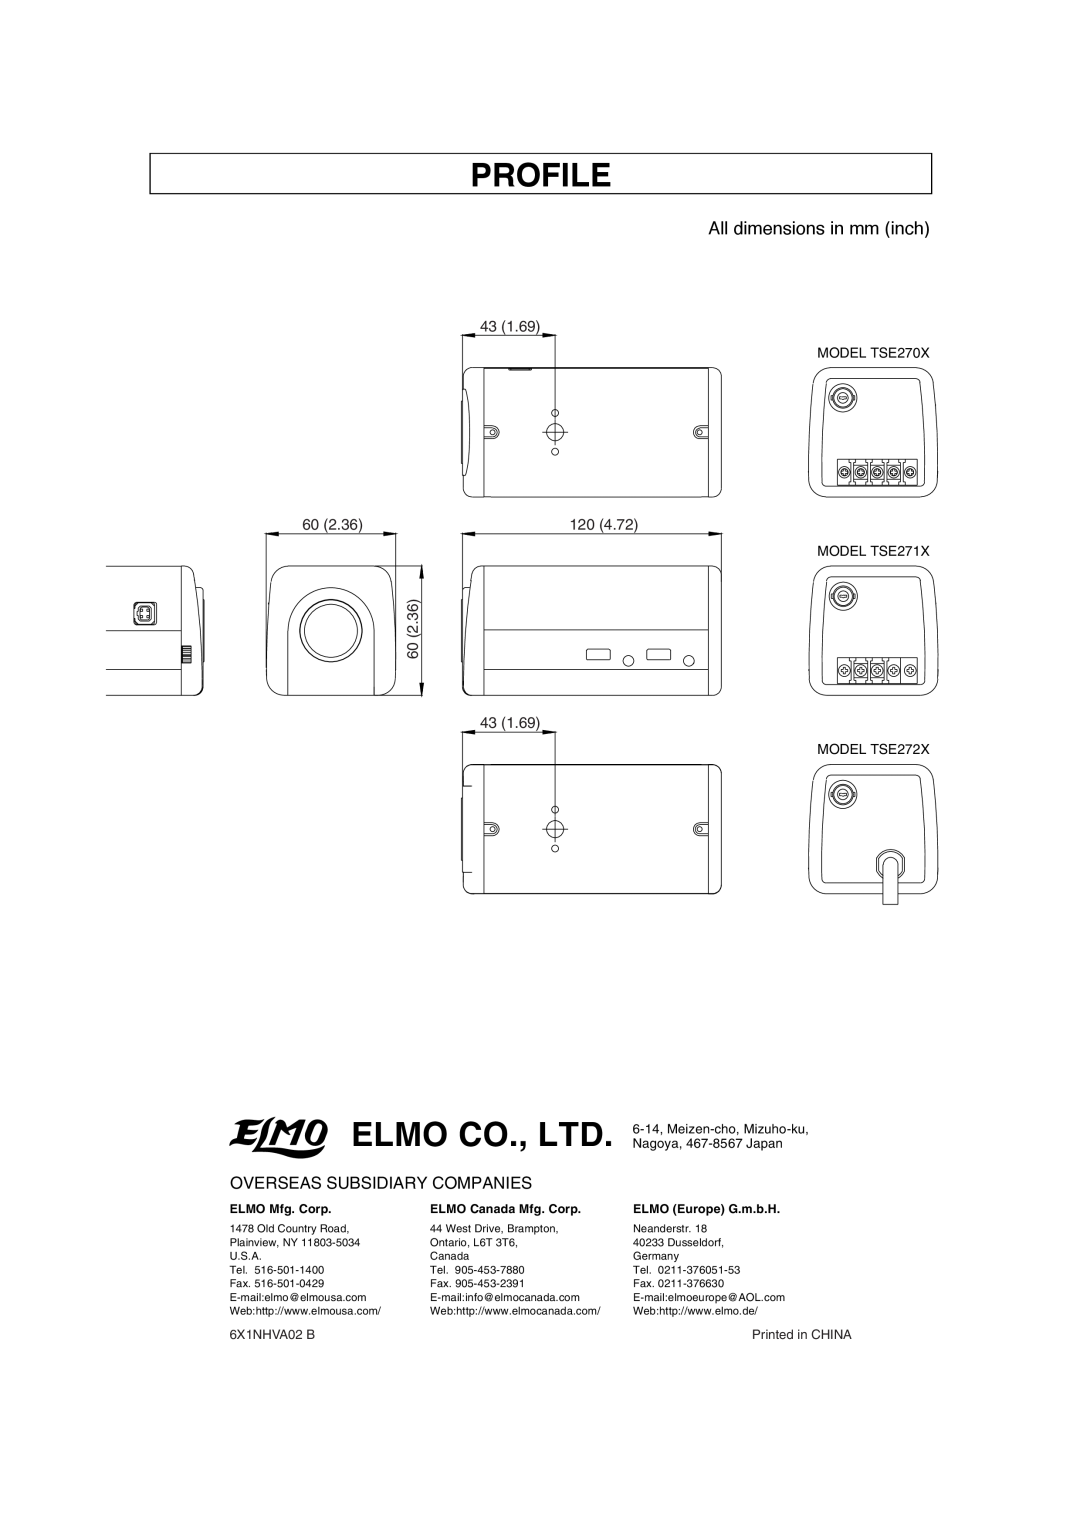 Elmo TSE271X Profile, All dimensions in mm inch, Overseas Subsidiary Companies, ELMO Mfg. Corp, ELMO Canada Mfg. Corp 